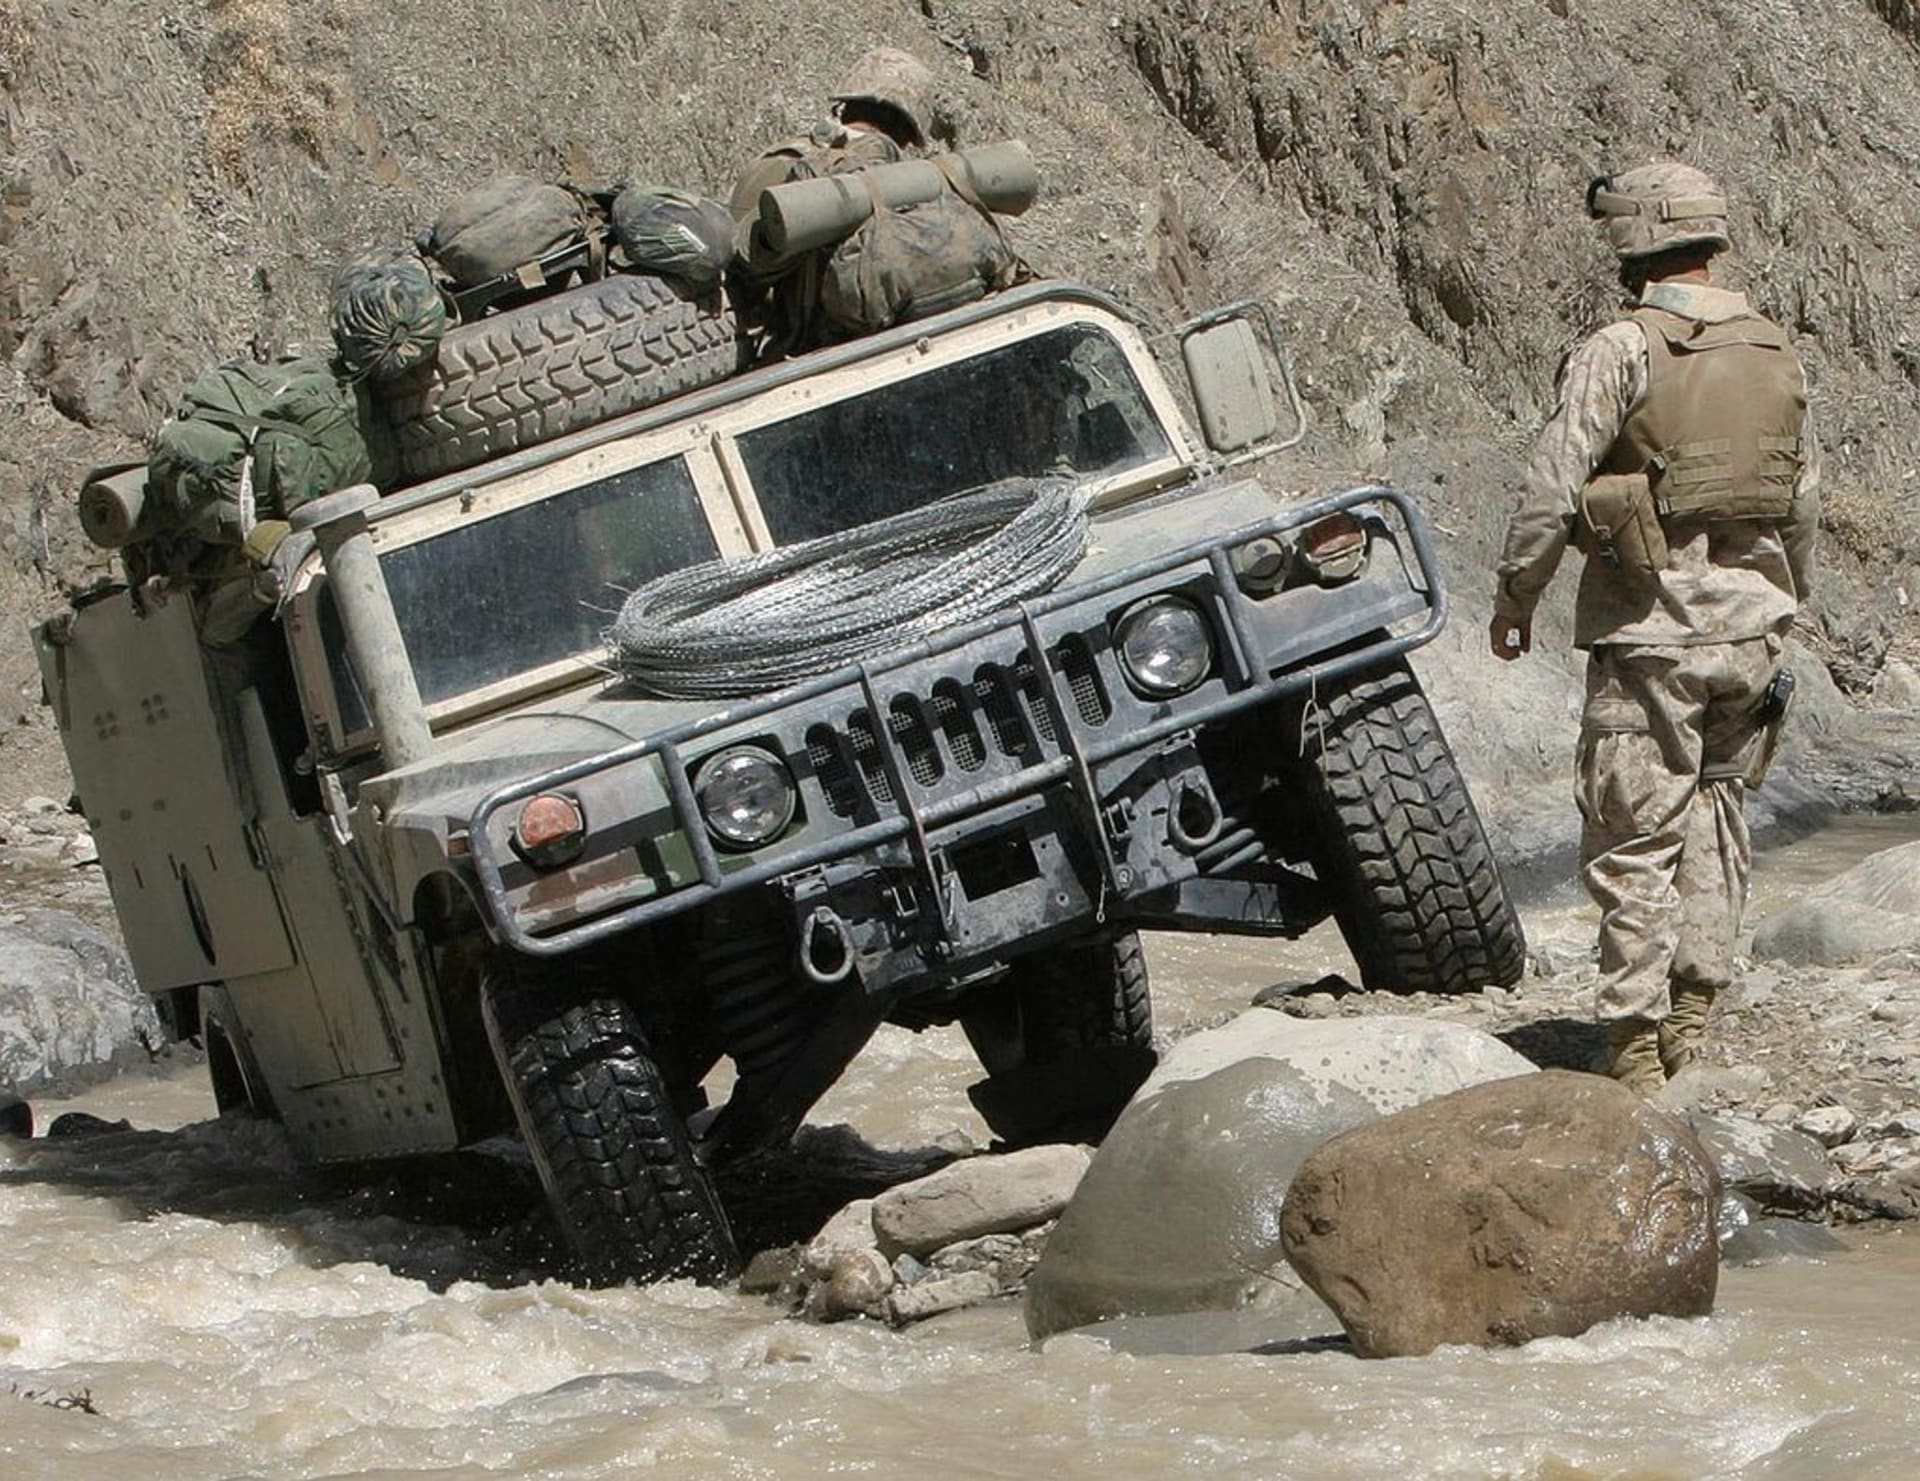 Humwee v afghánském terénu